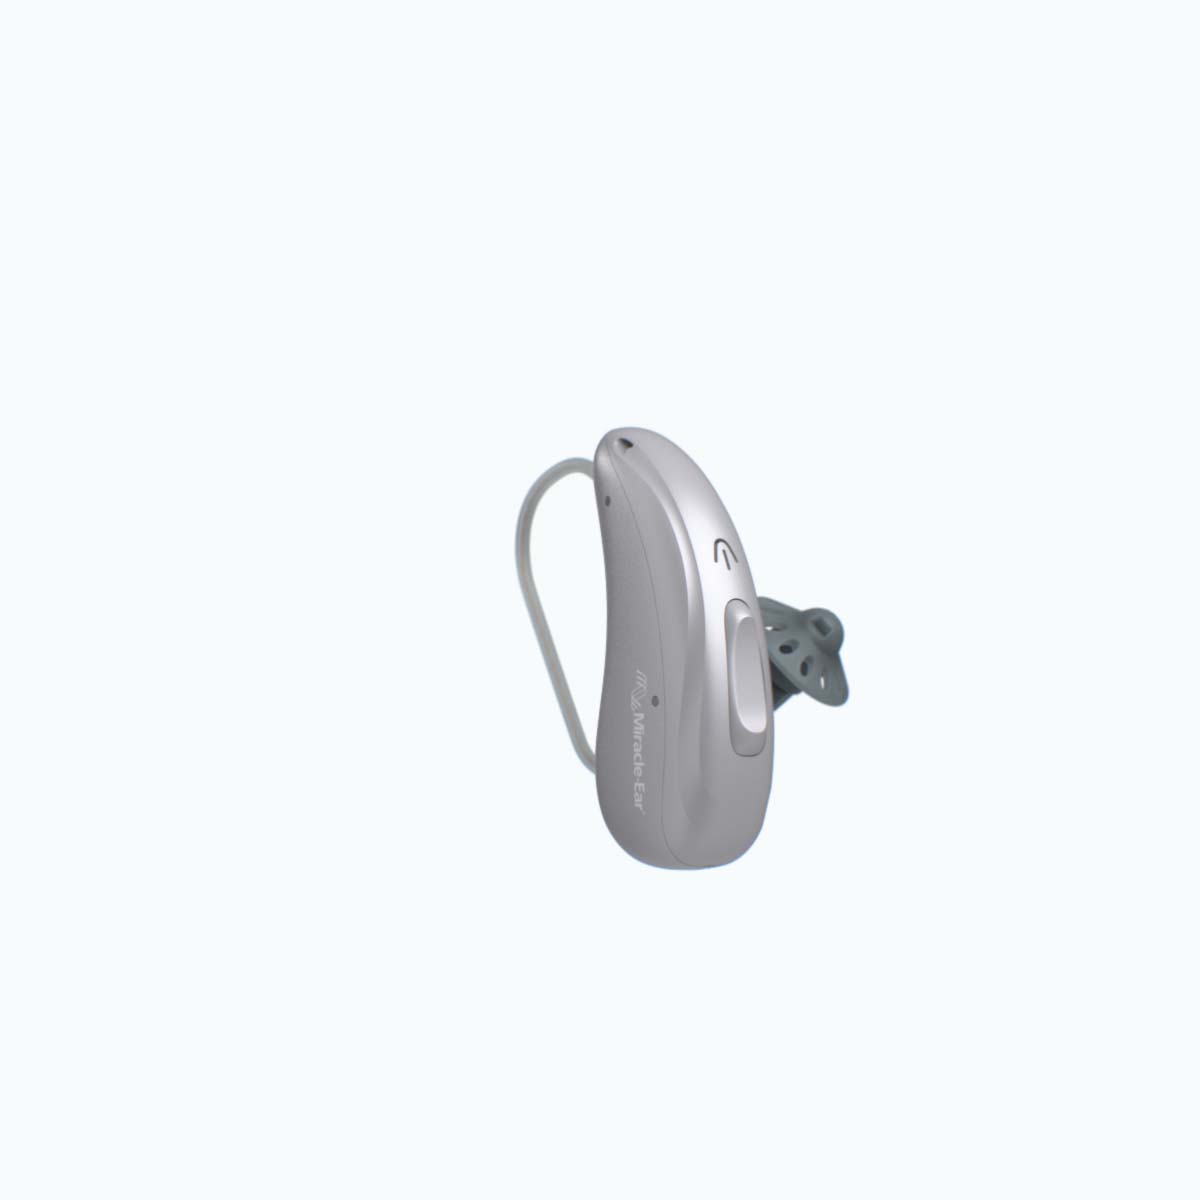 Innovative MEENERGY™ RIC A AX hearing aid